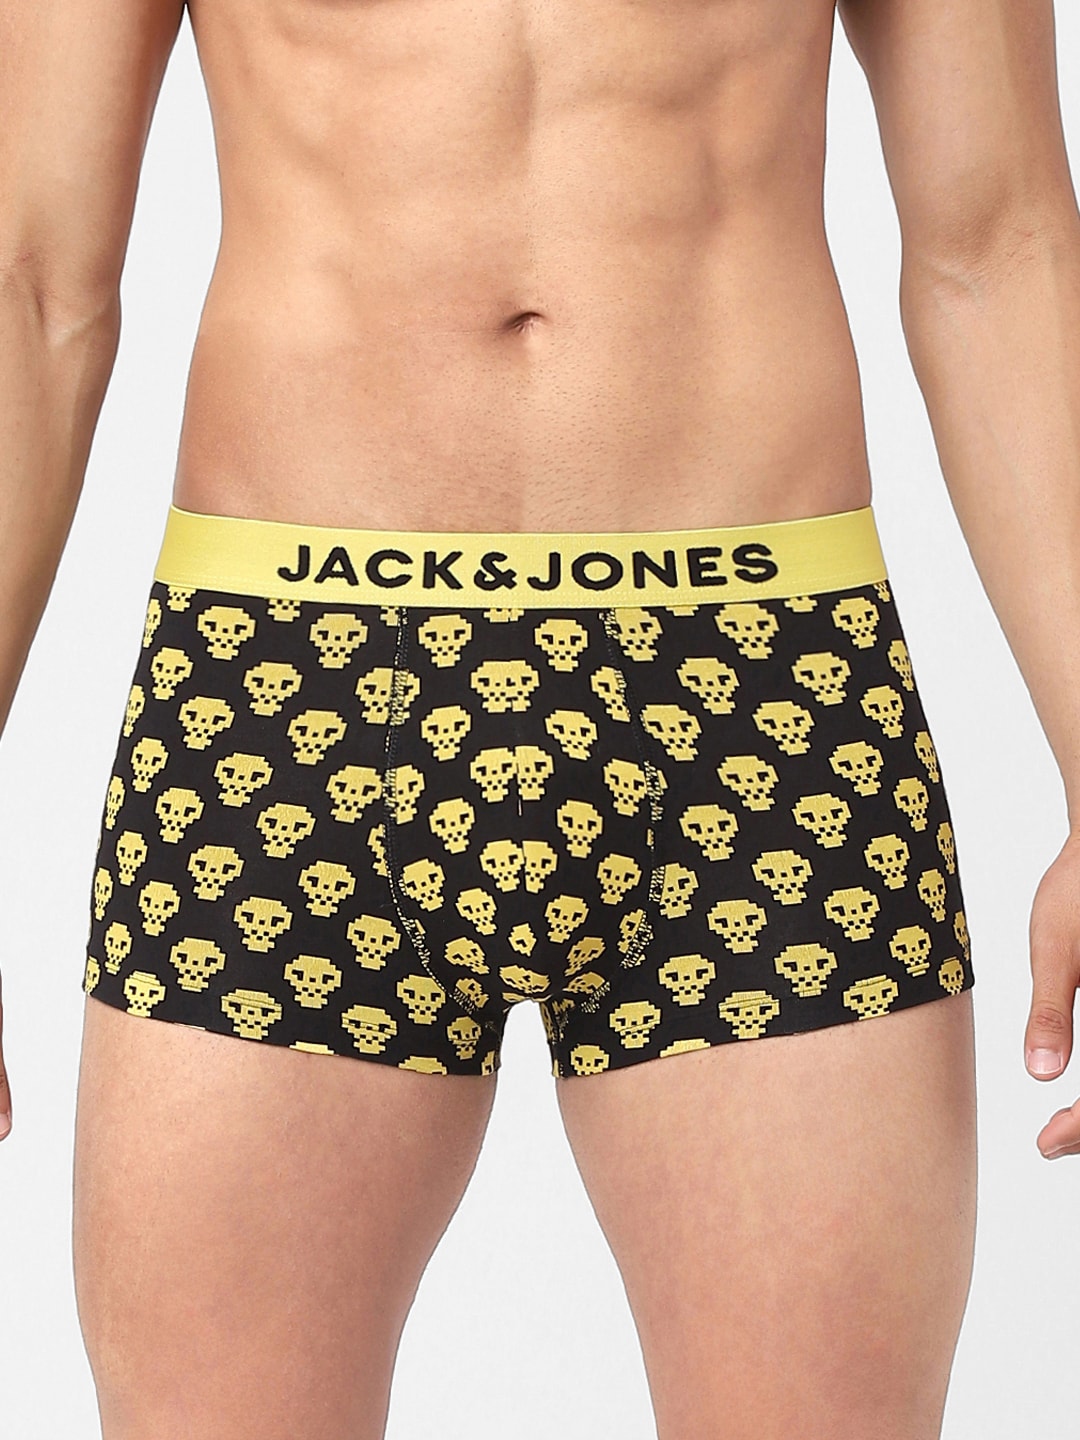 Jack & Jones Men Yellow & Black Printed Cotton Trunks 116797901